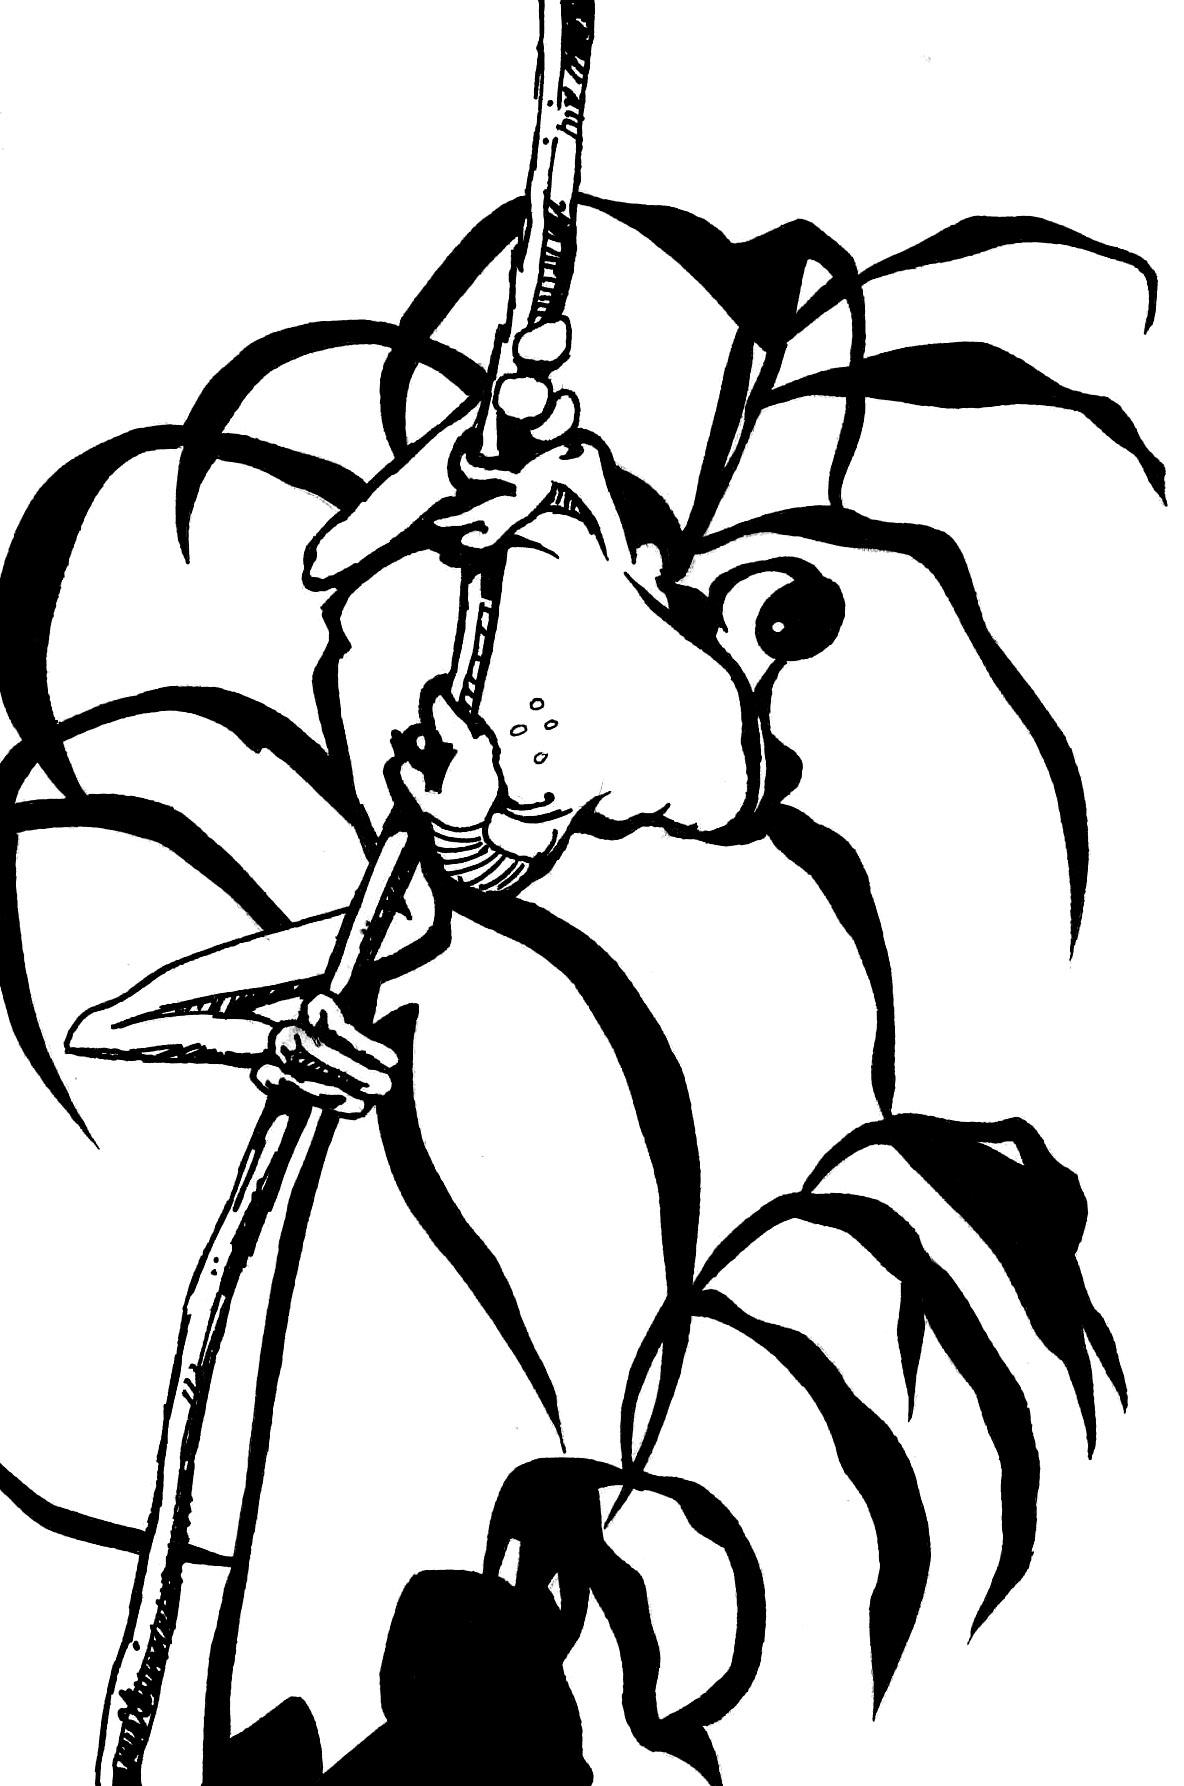 Back to: Tree Frog- ink animal drawing/artwork